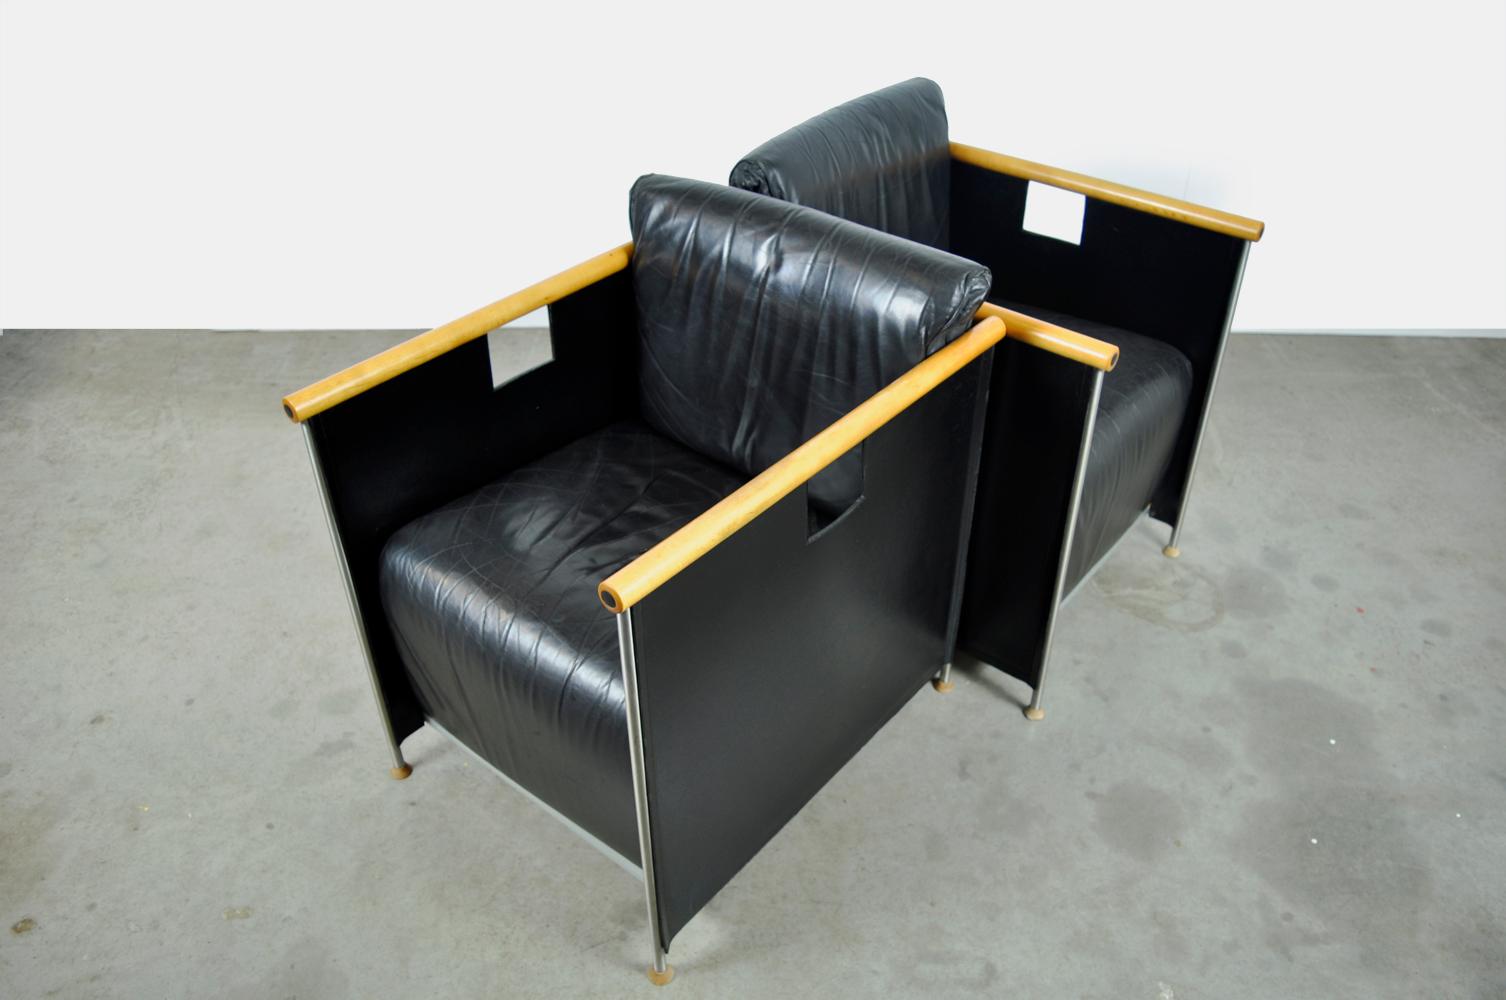 Steel Vintage Modern the Box Easy Chairs by Mazairac & Boonzaaijer for Castelijn, 80s For Sale